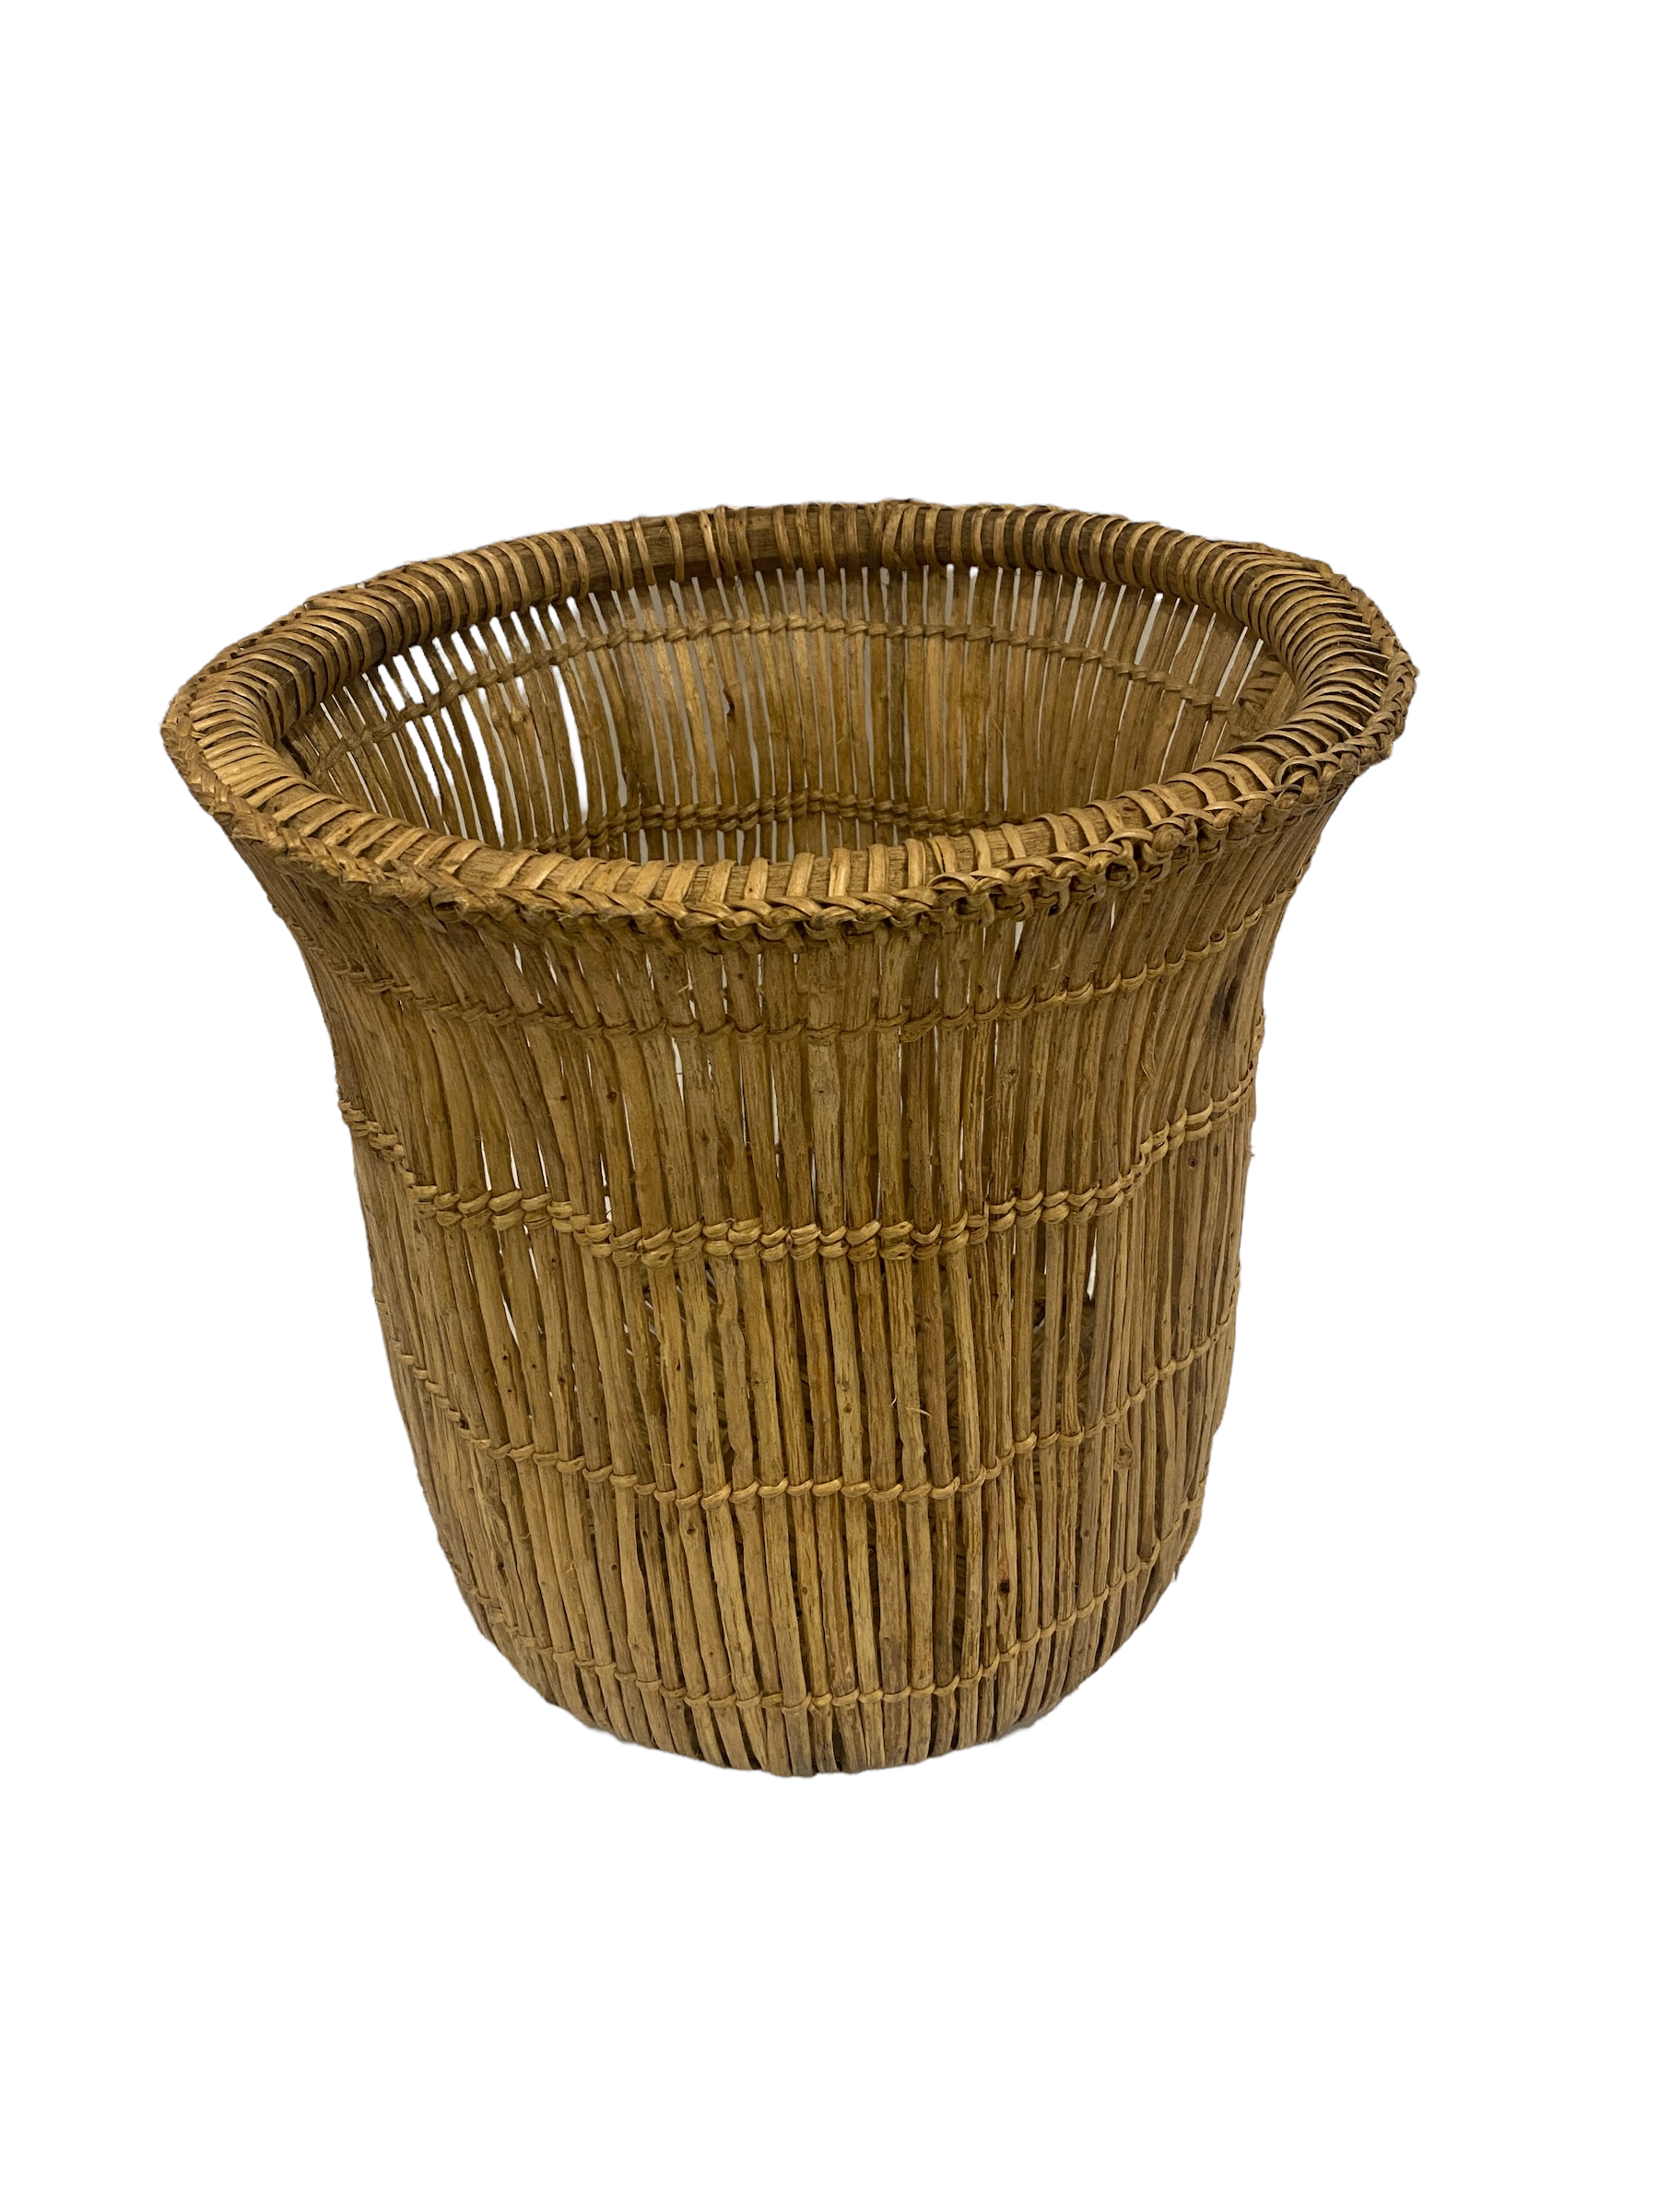 botanicalboysuk Fishing Basket - Zambia (tr63) Xl